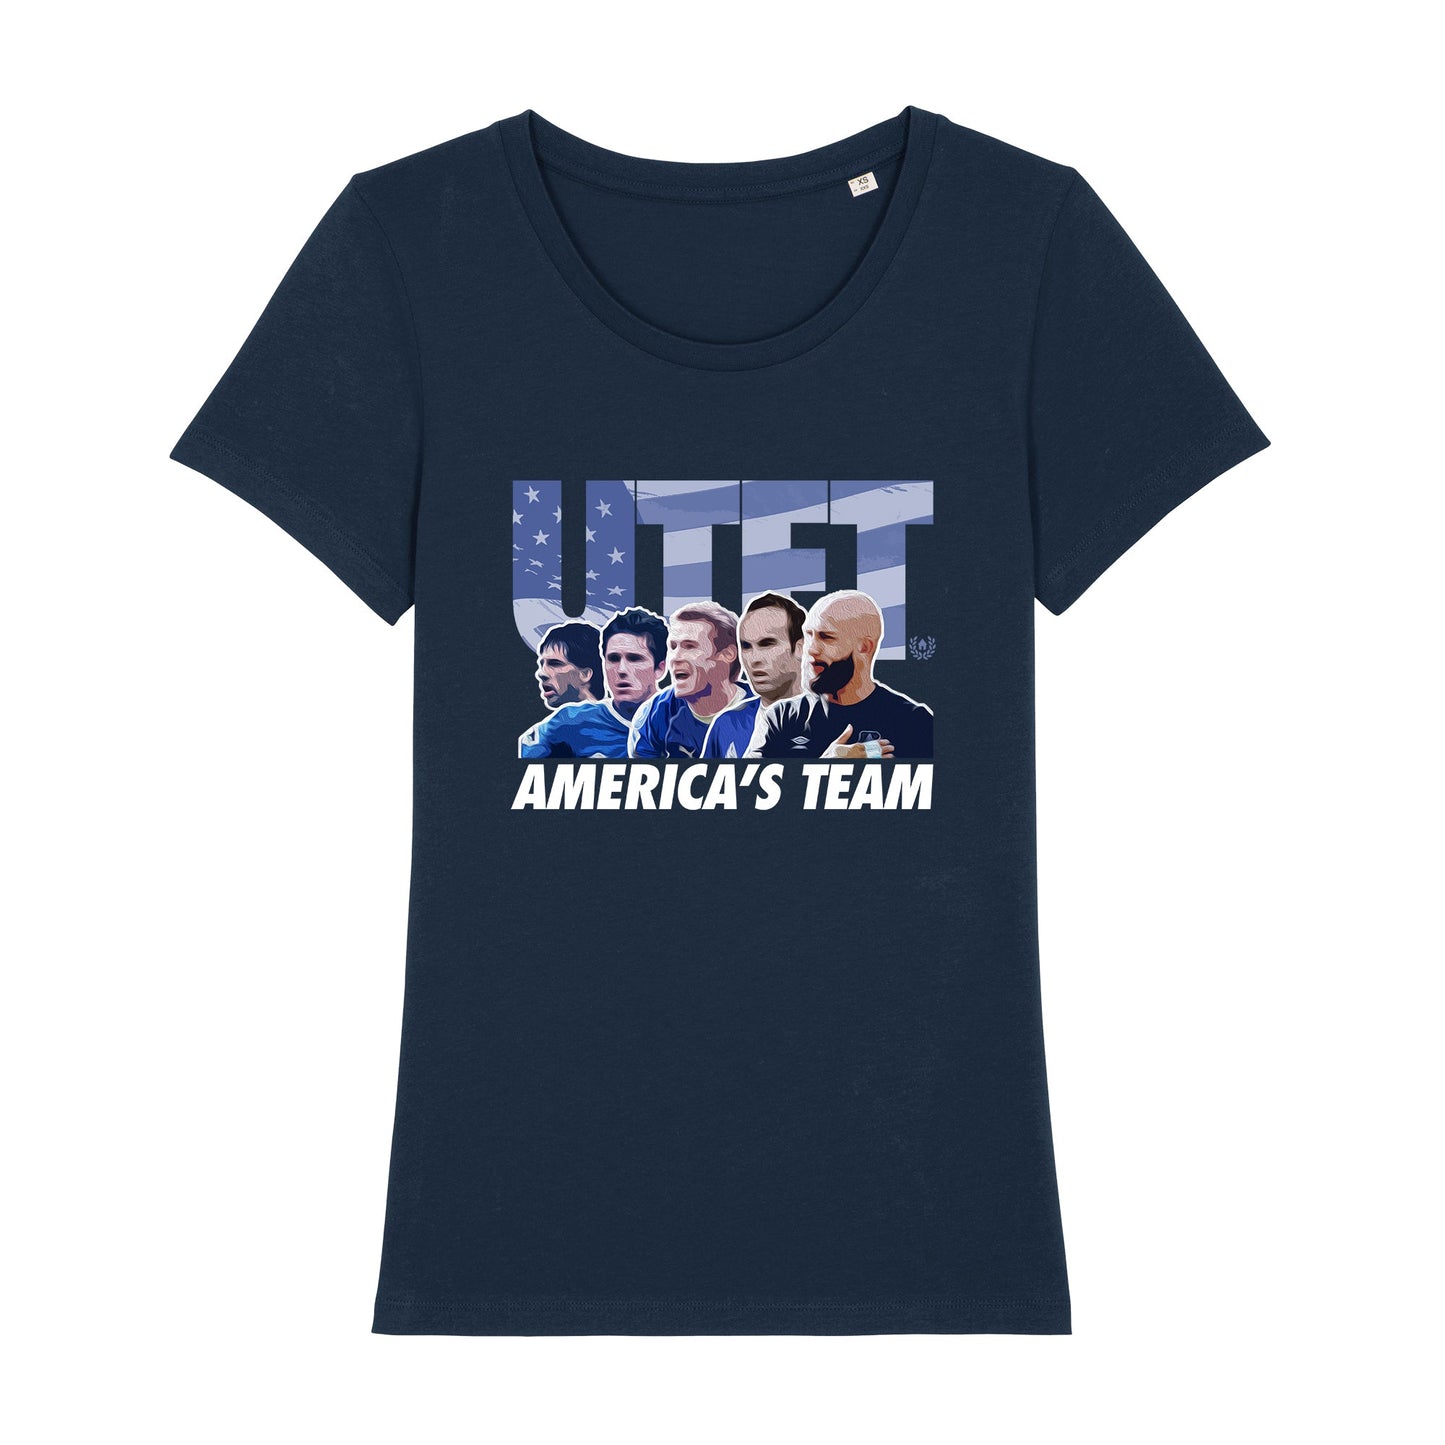 America's Team Women's Tee